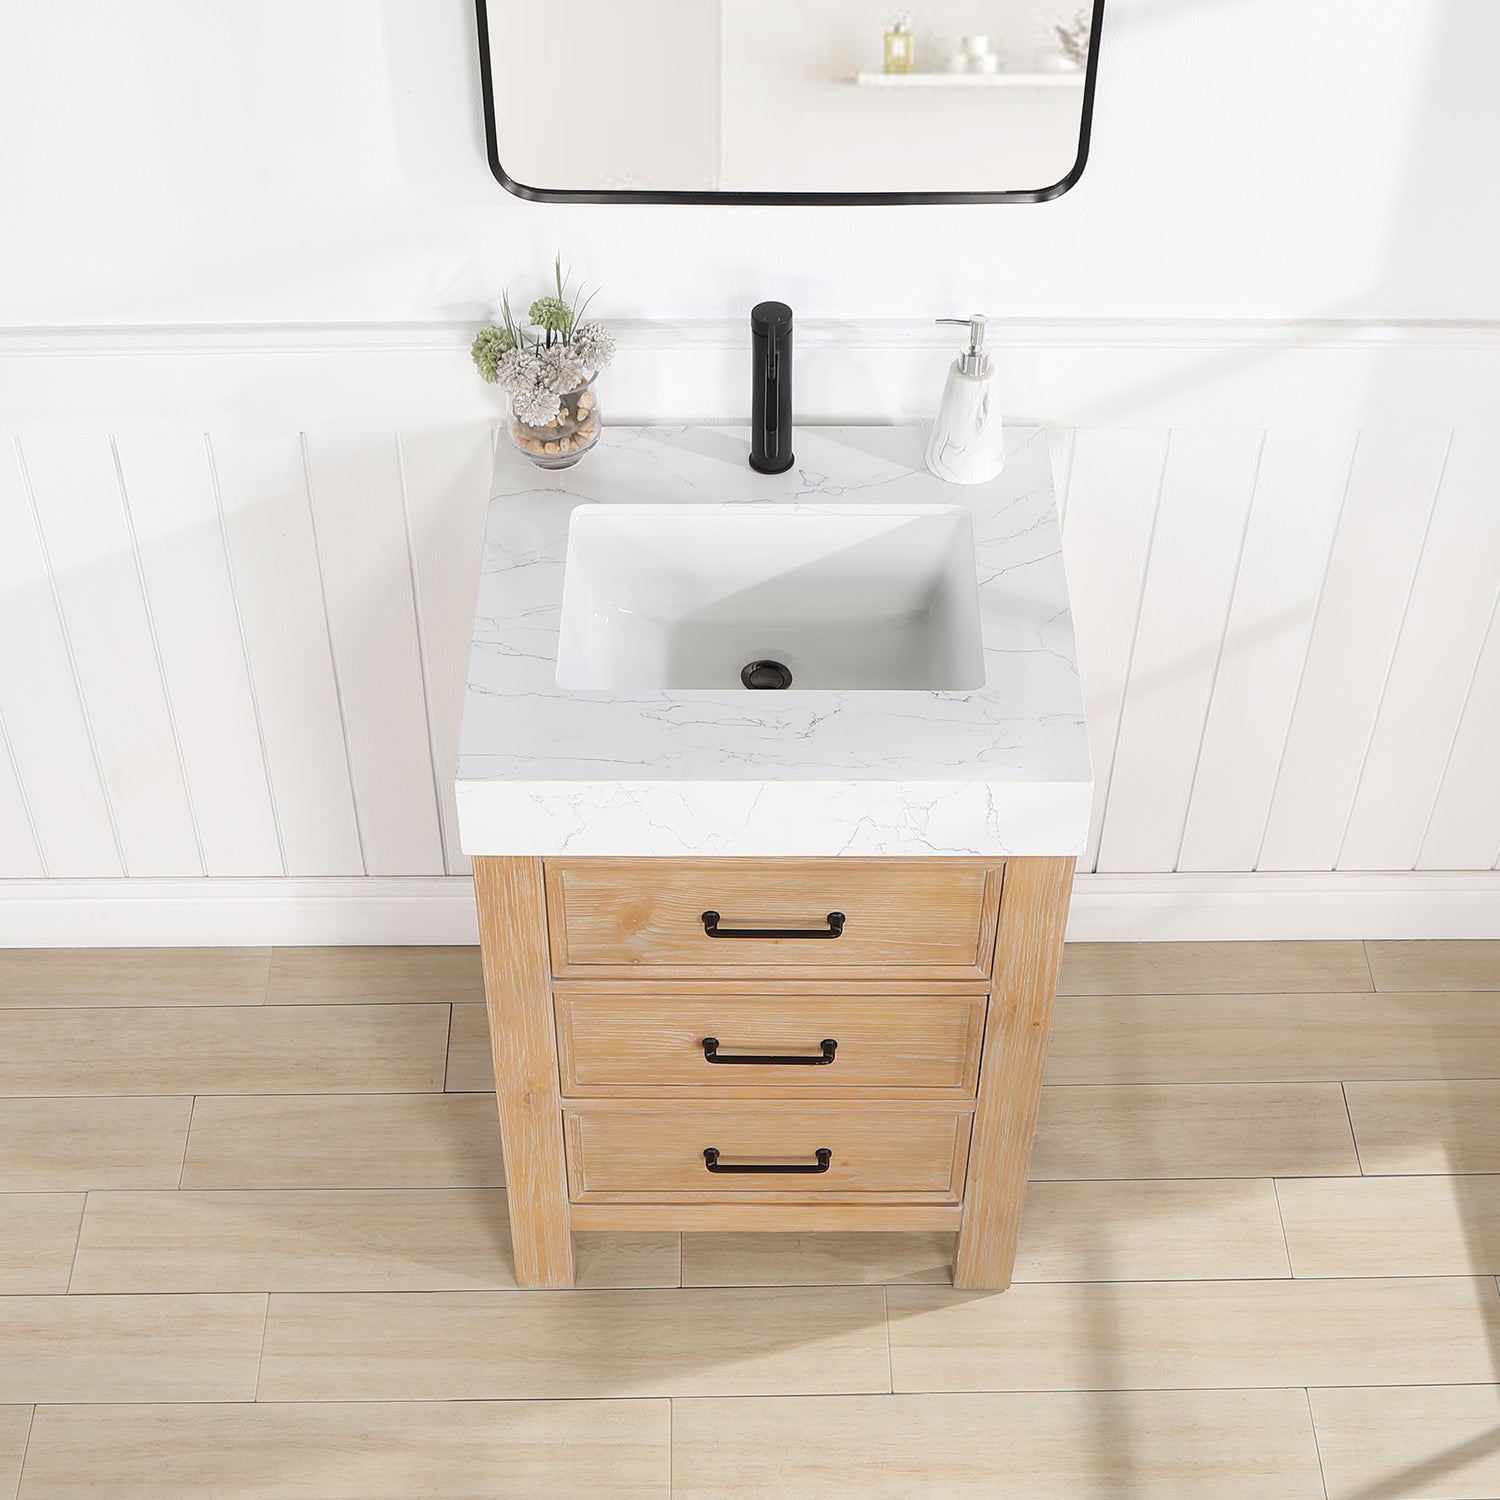 León 24in. Free-standing Single Bathroom Vanity in Fir Wood Brown with Composite top in Lightning White